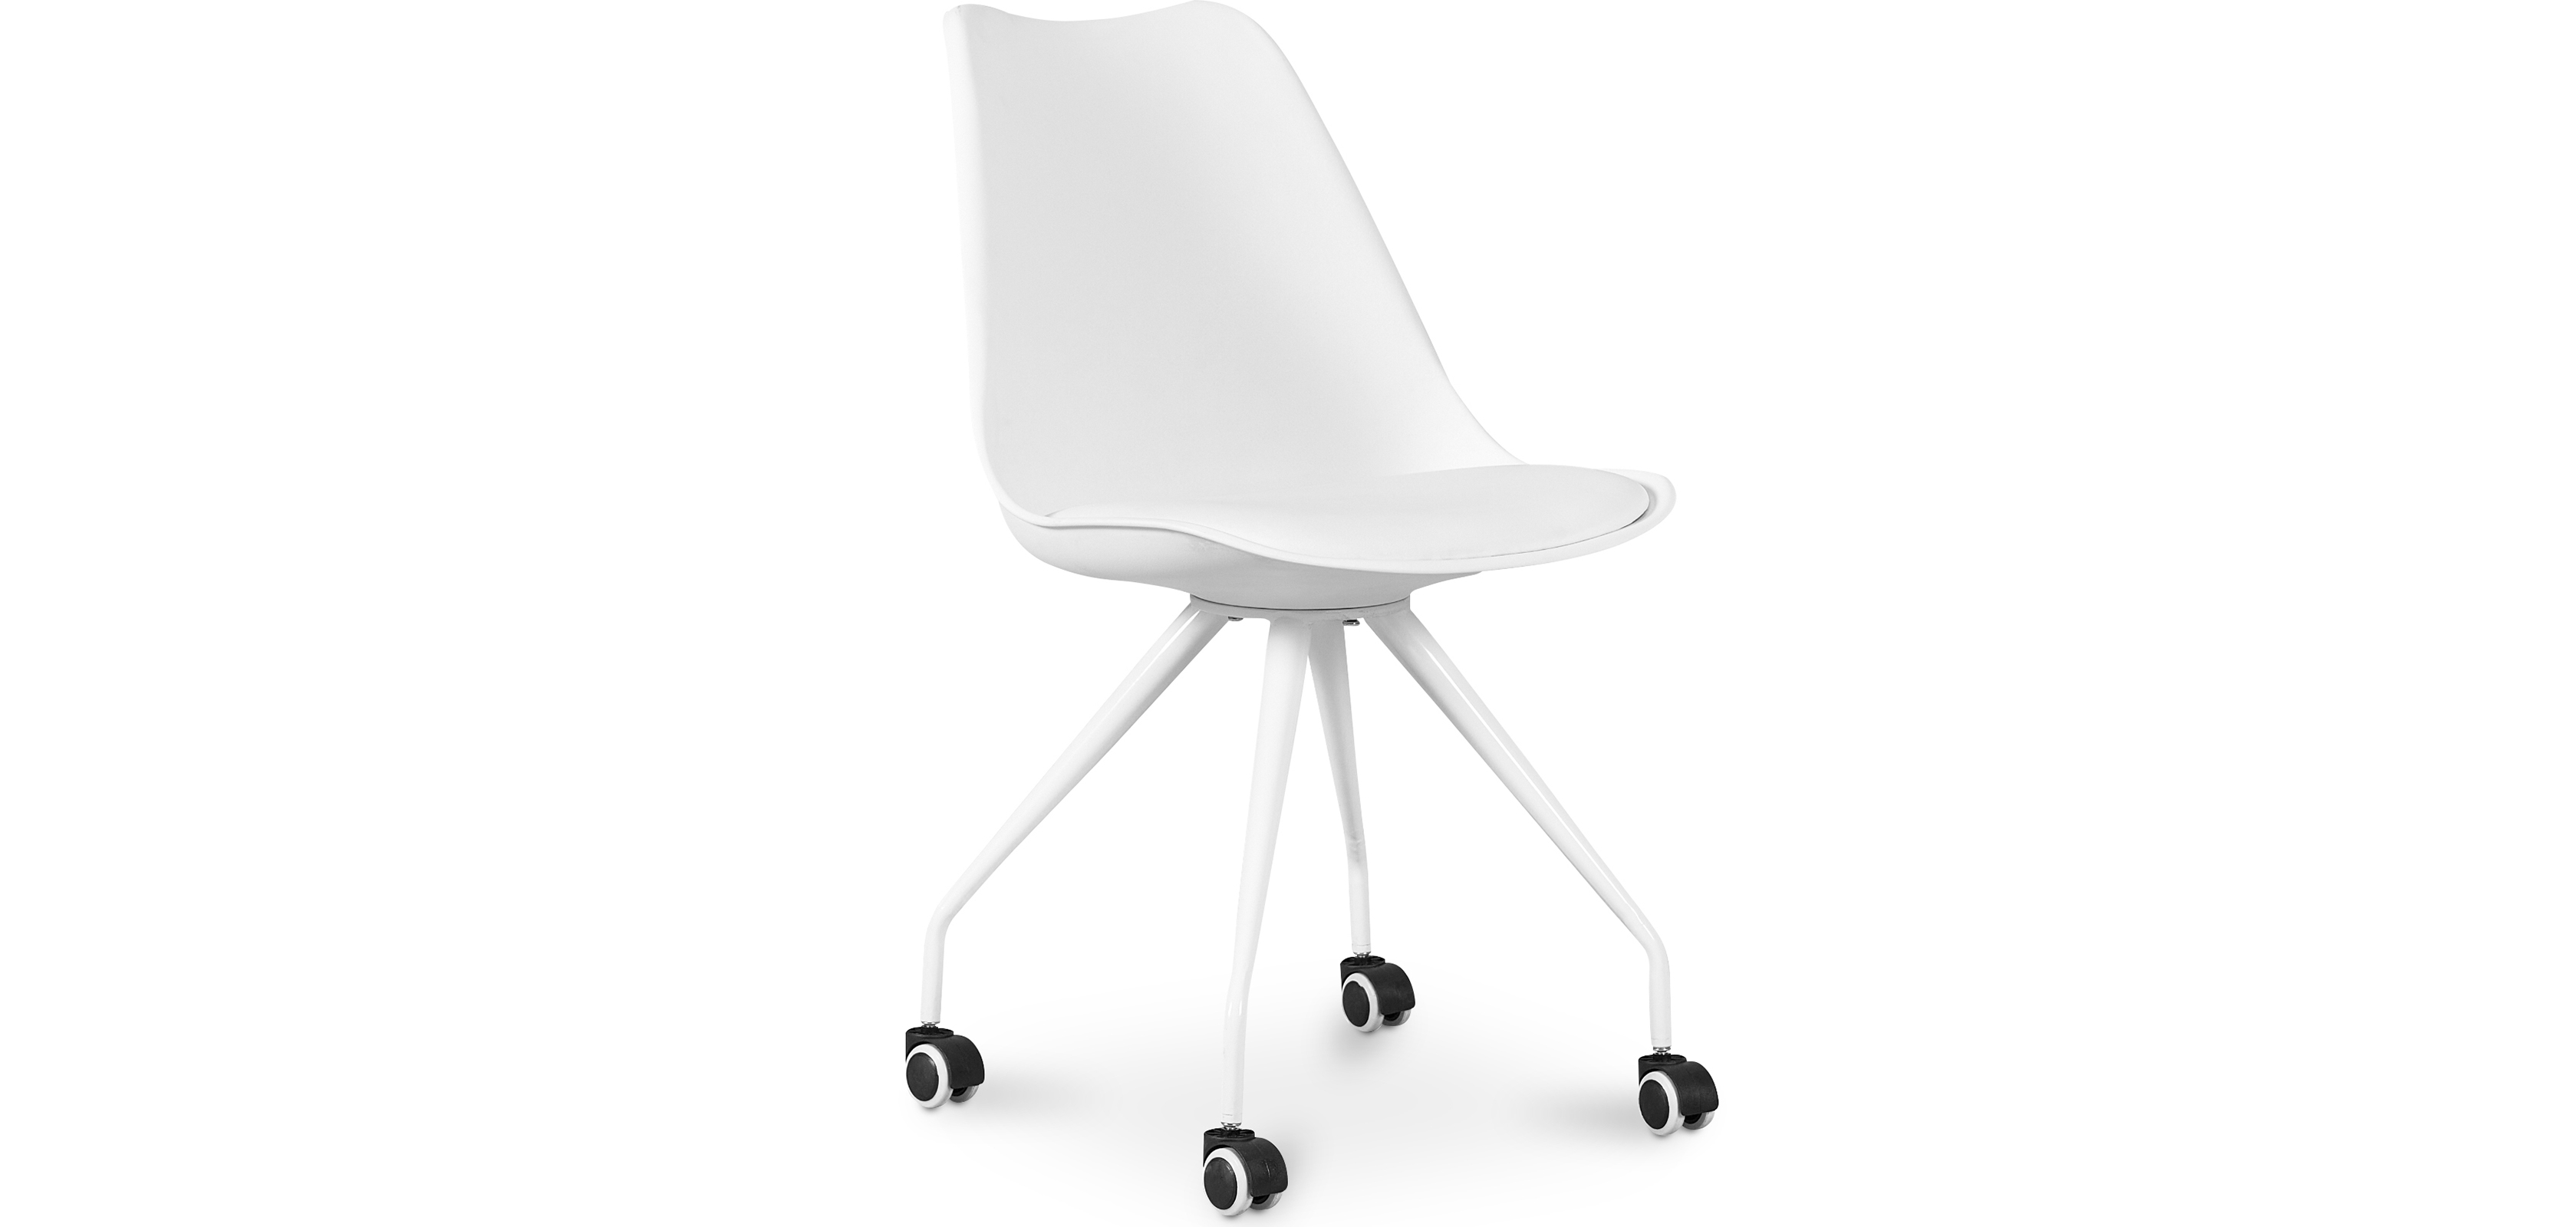 Buy Scandinavian Office chair with Wheels  - Dana White 59904 - in the UK